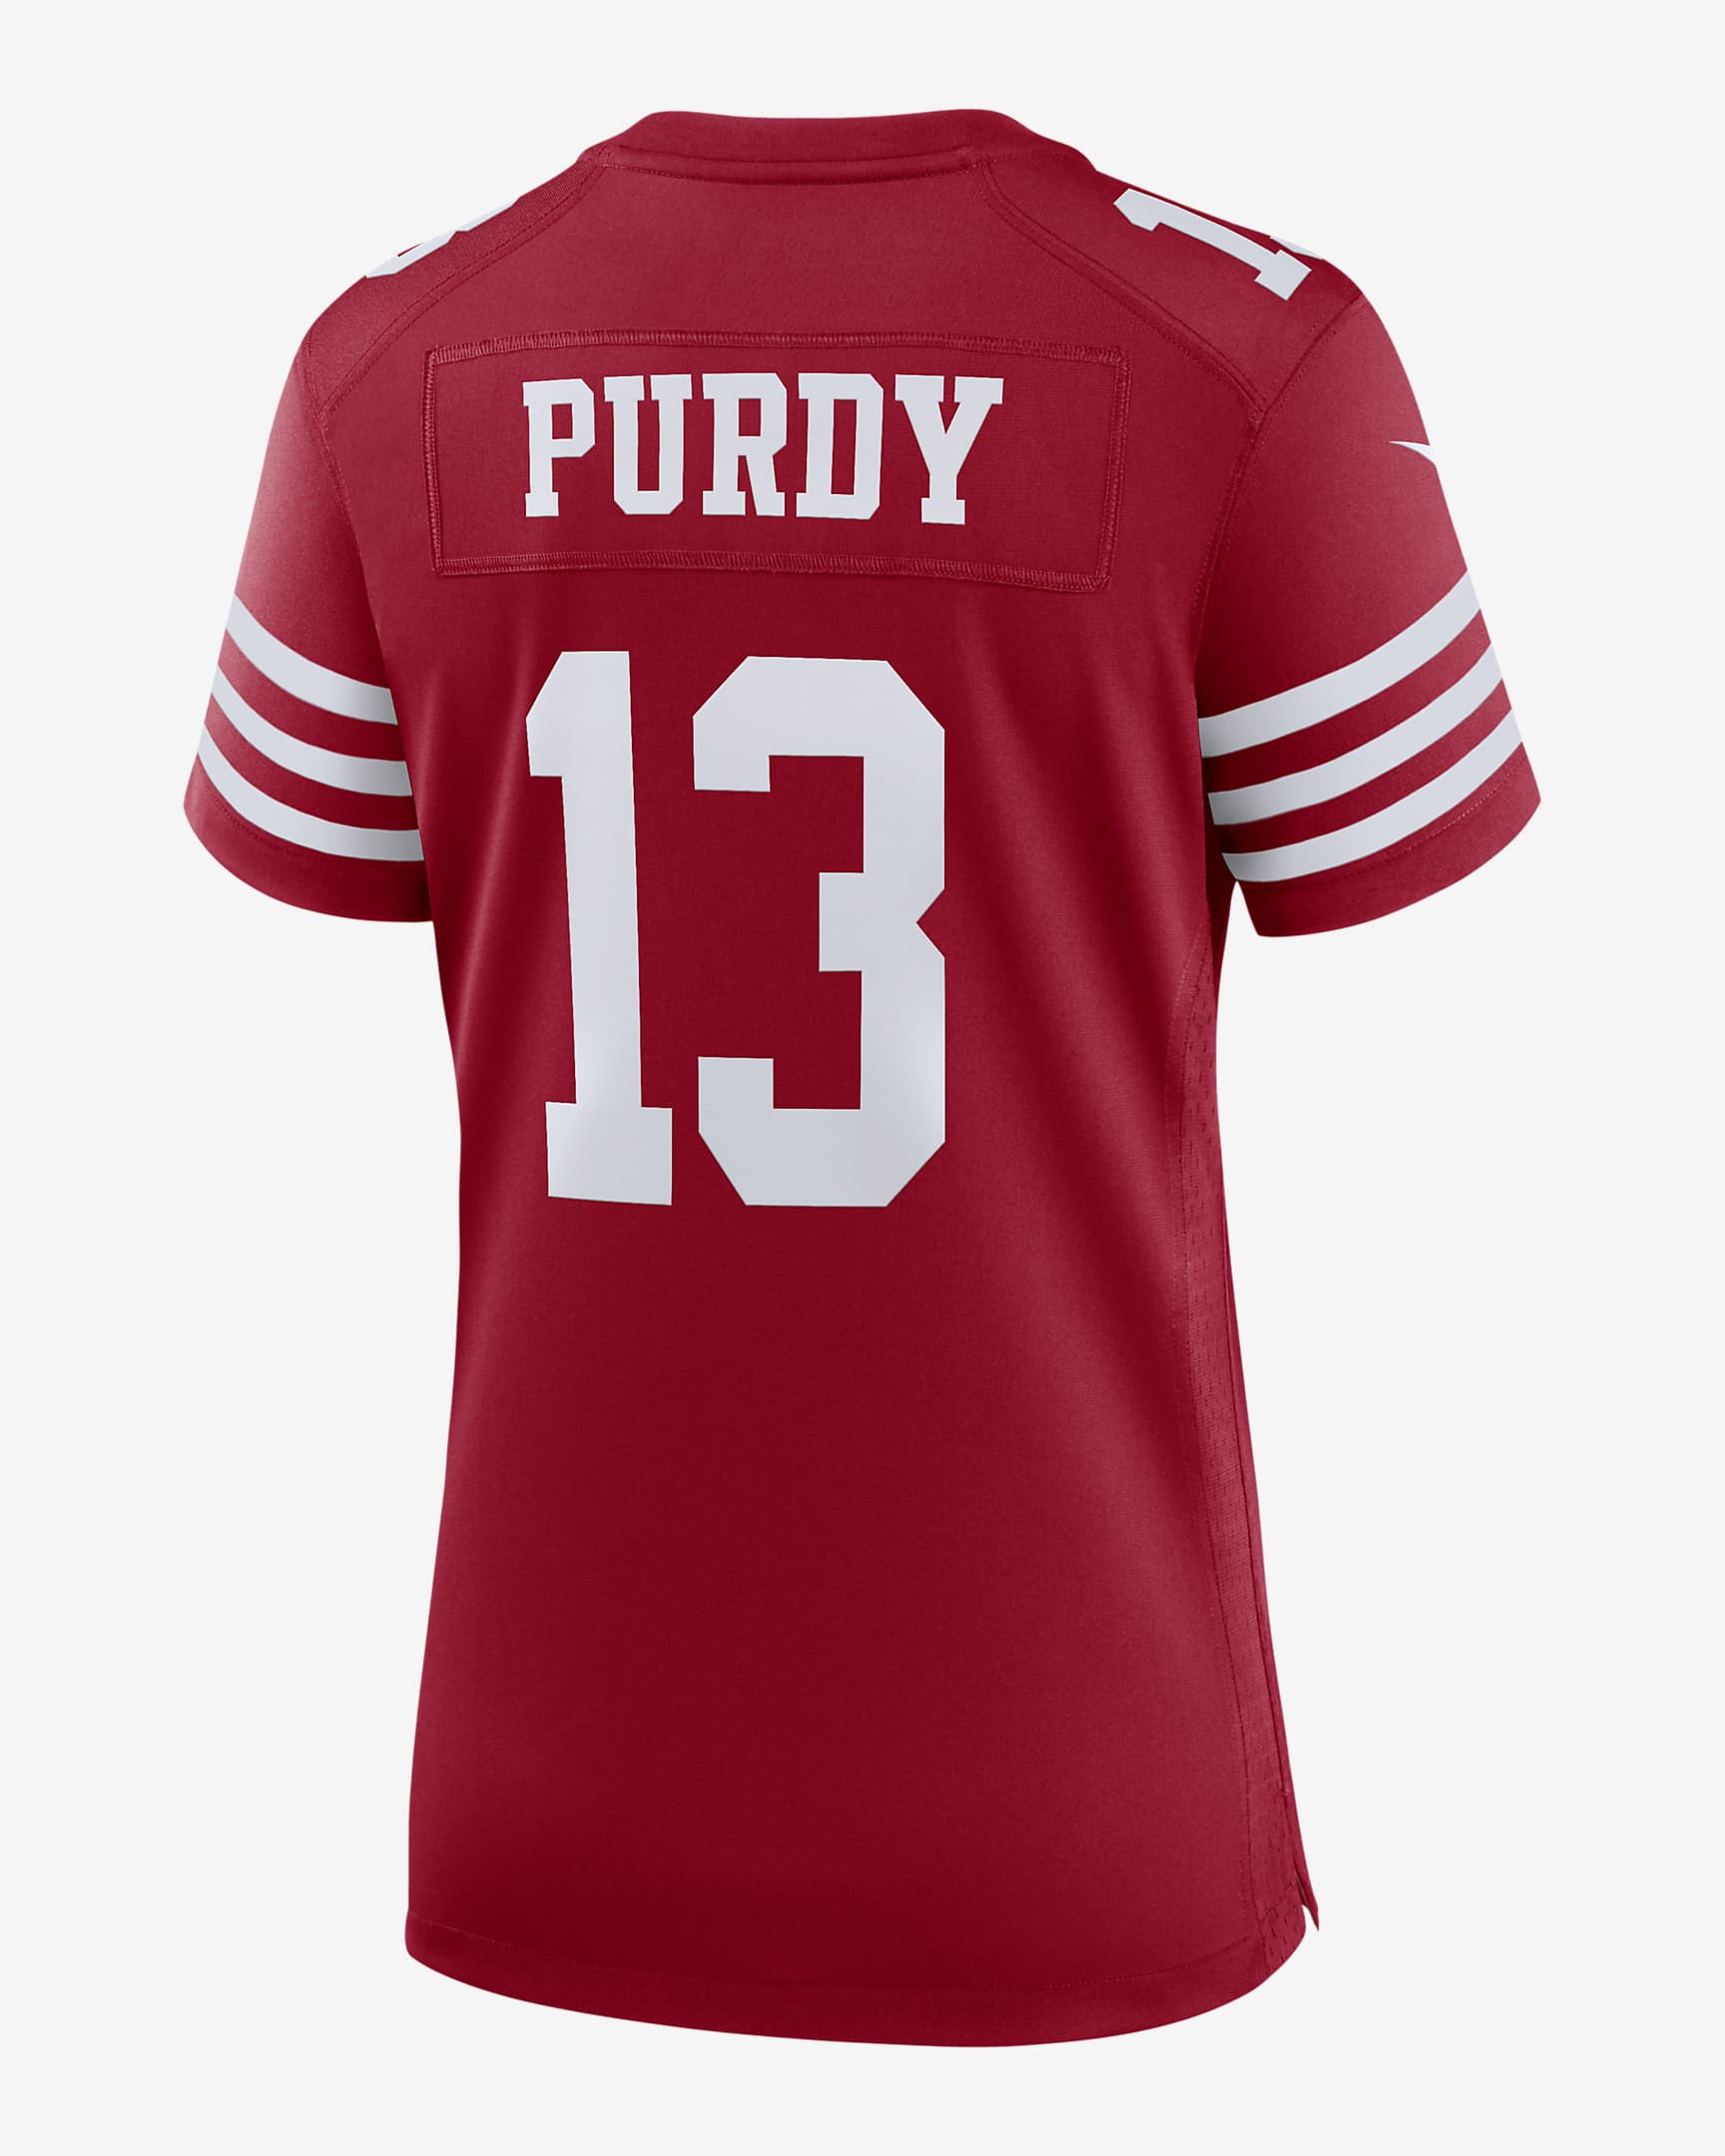 Jersey Nike de la NFL Game para mujer Brock Purdy San Francisco 49ers ...